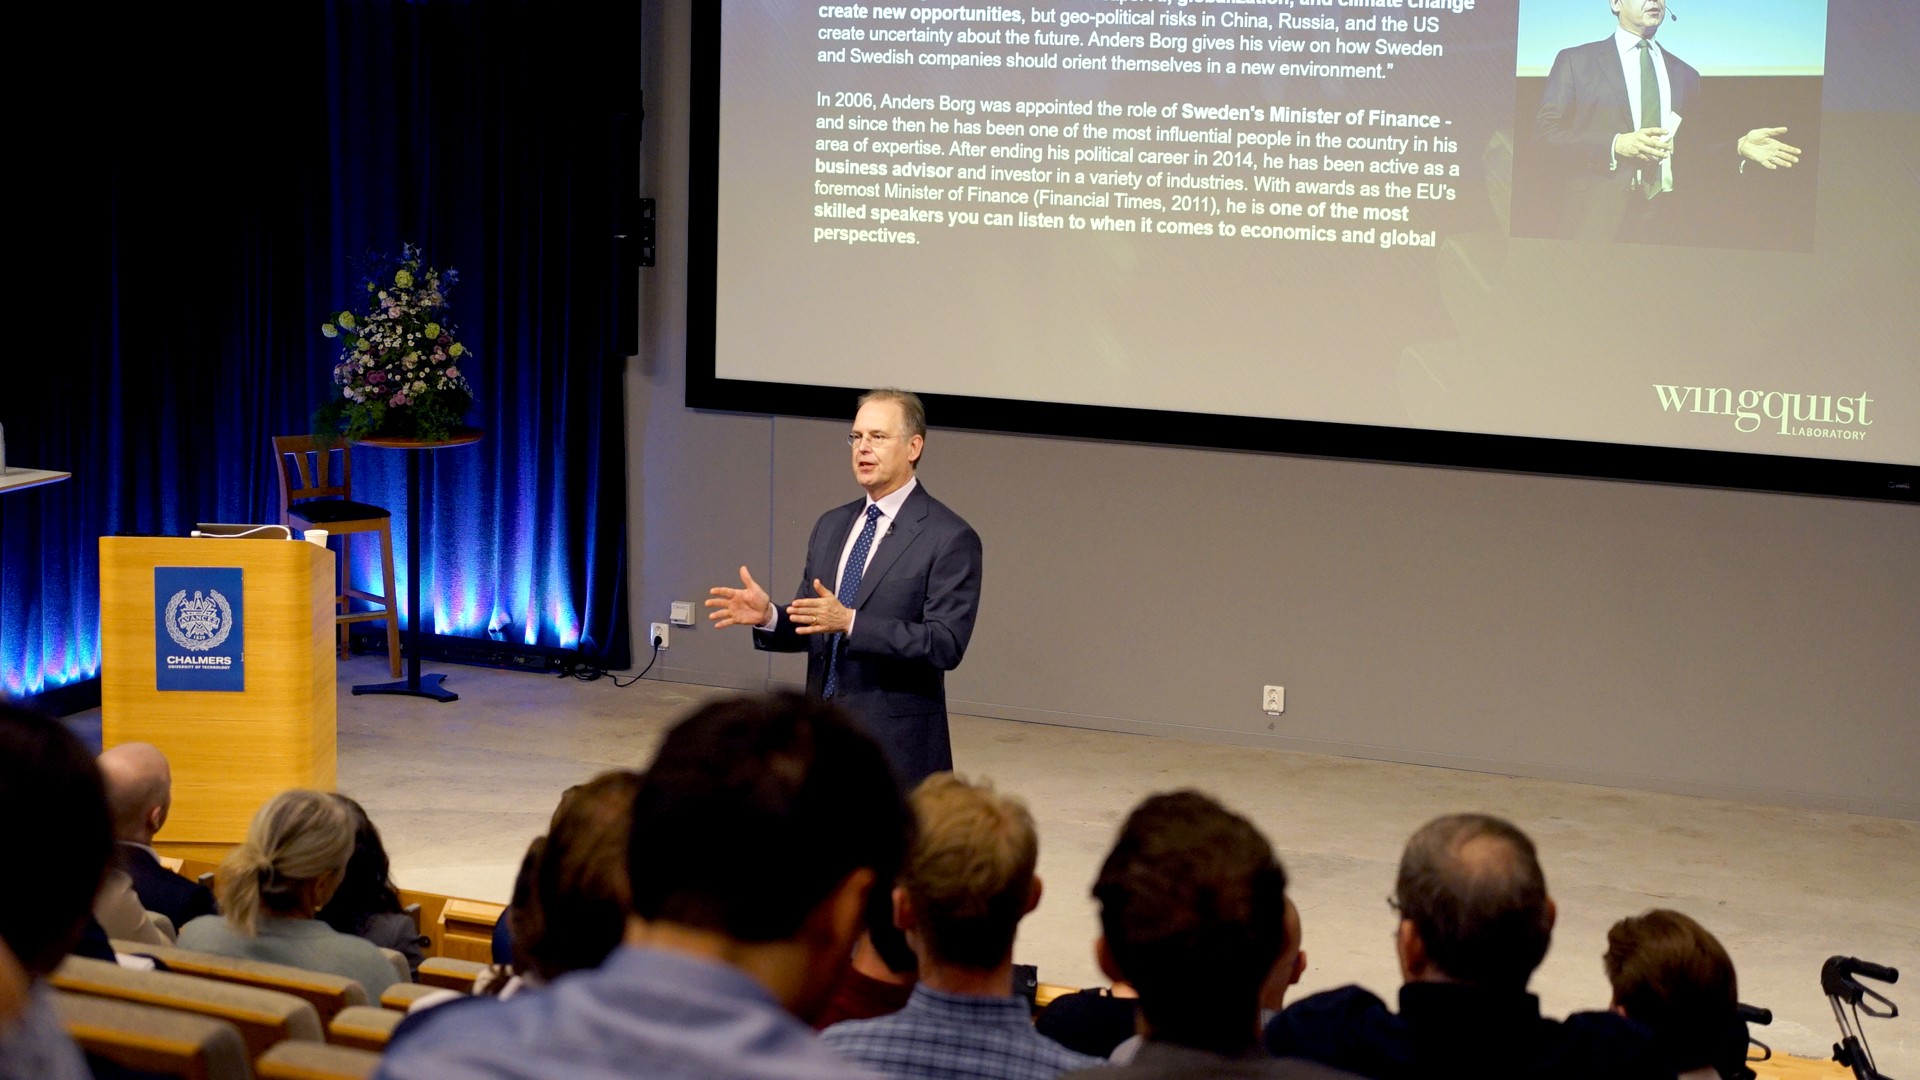 Anders Borg presenting at the seminar.